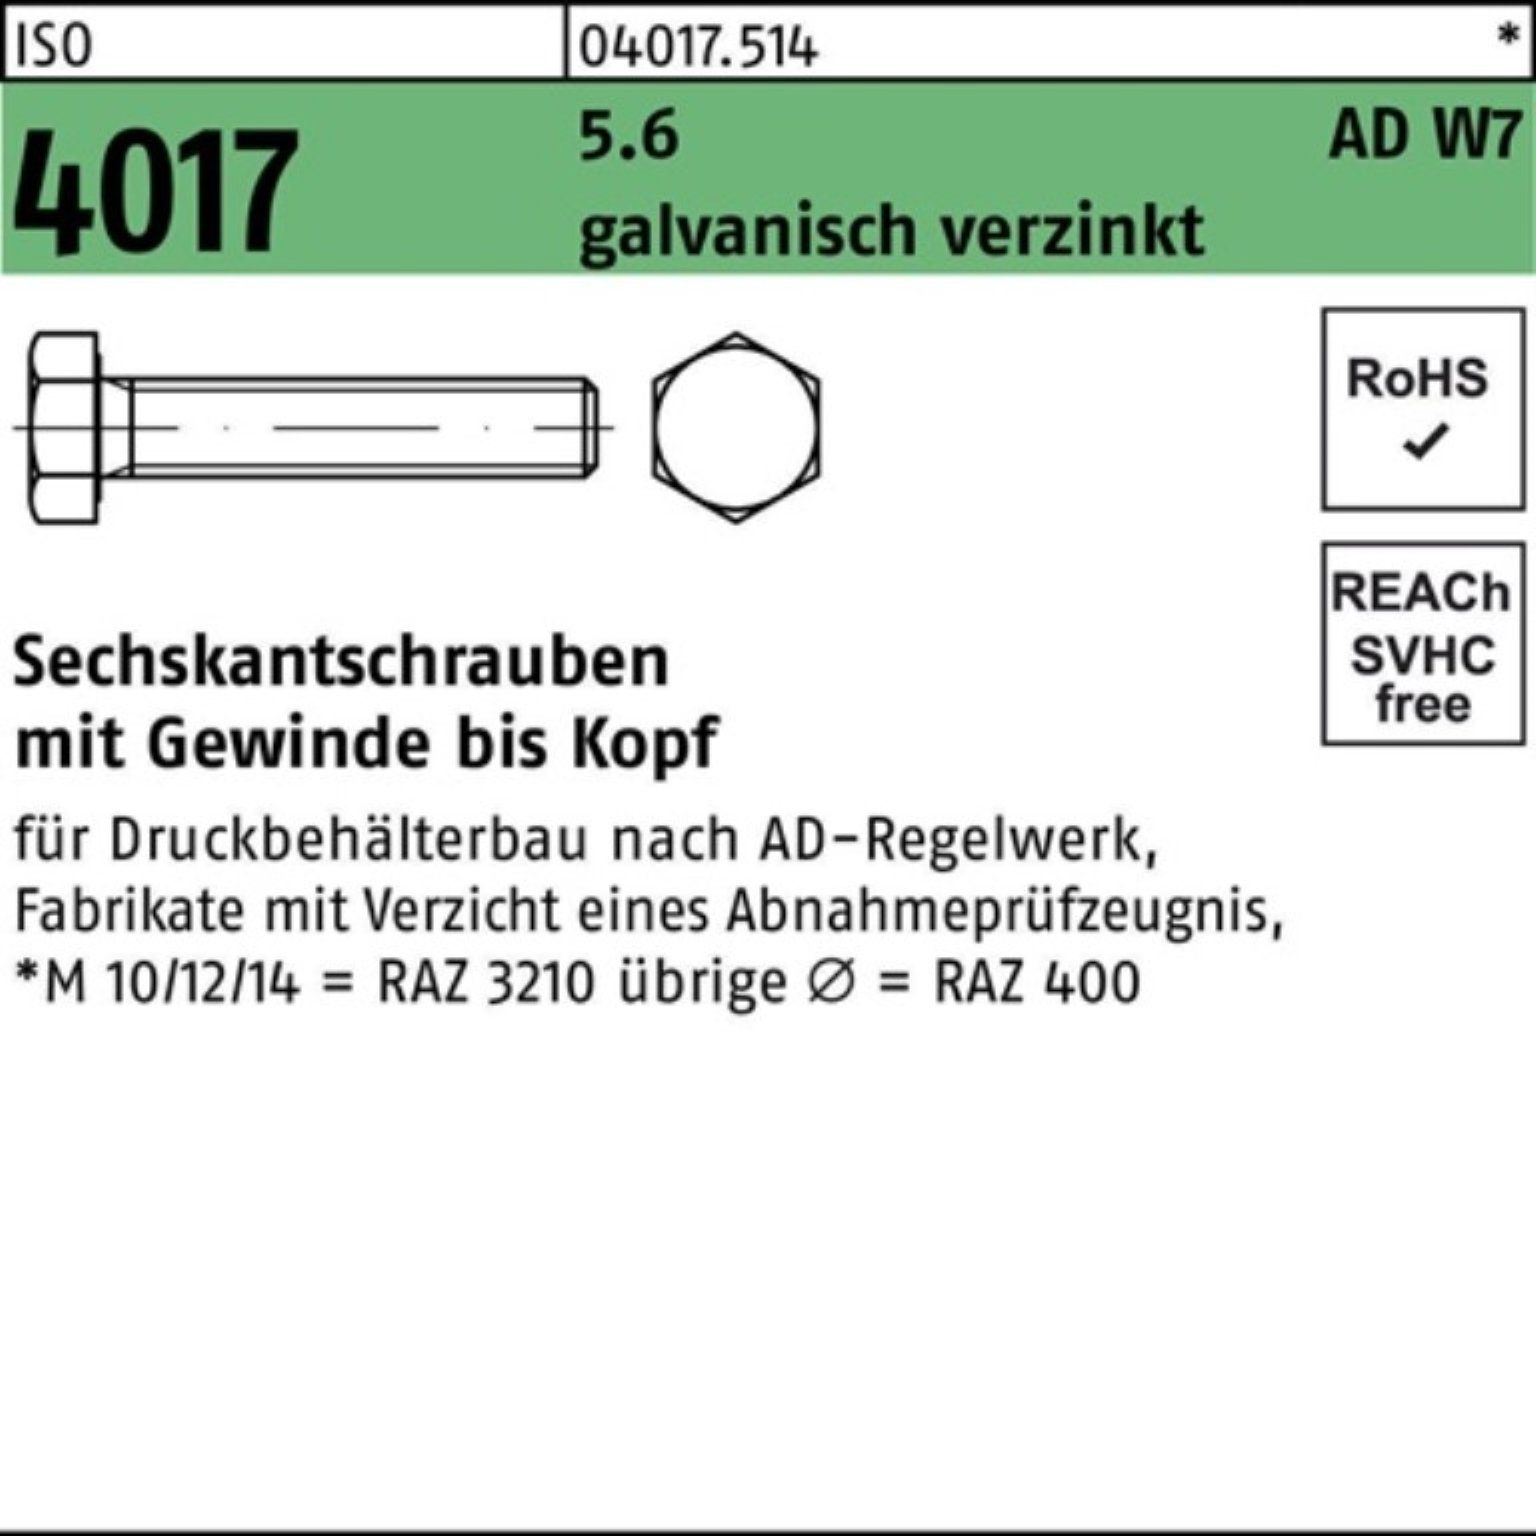 Bufab Sechskantschraube VG ISO Sechskantschraube AD 50 100er 5.6 Pack M14x W7 galv.verz. 4017